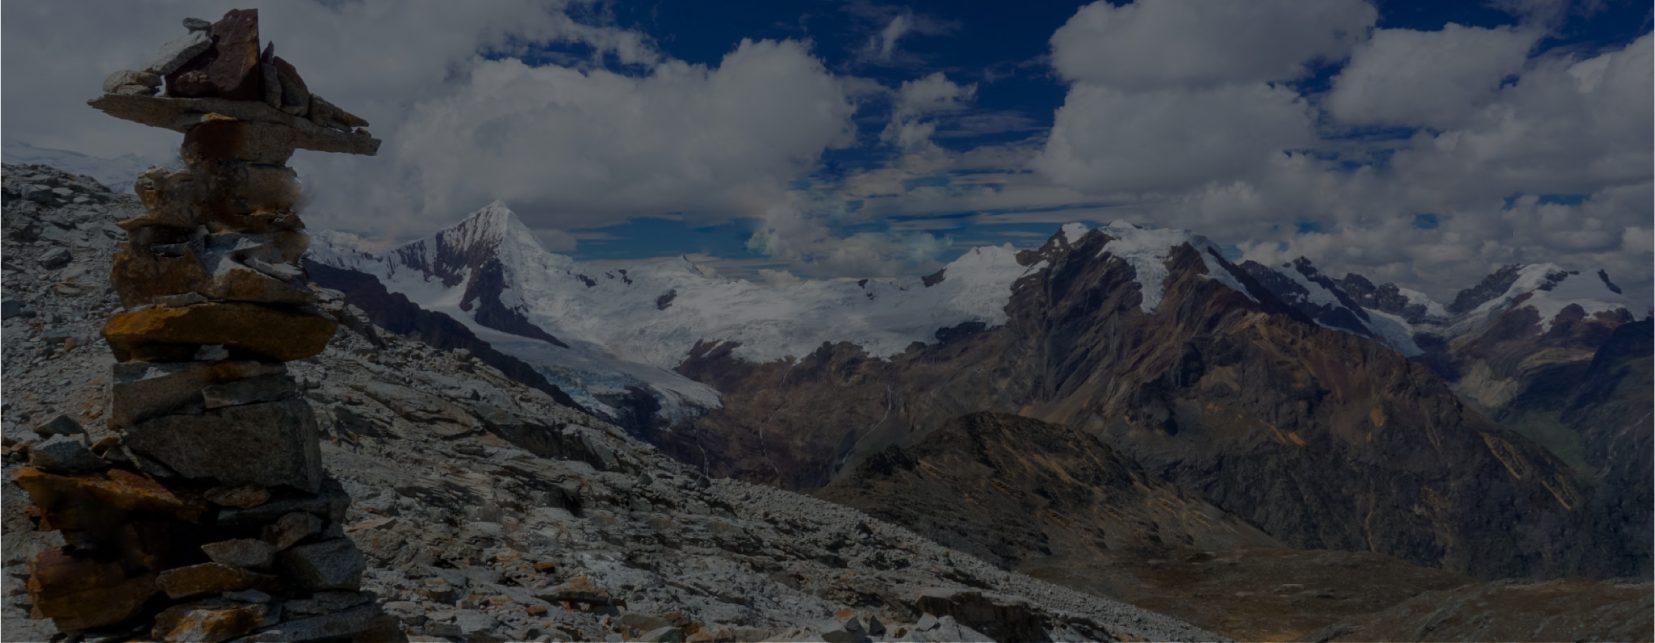 A Guide to the Endangered Pastoruri Glacier image